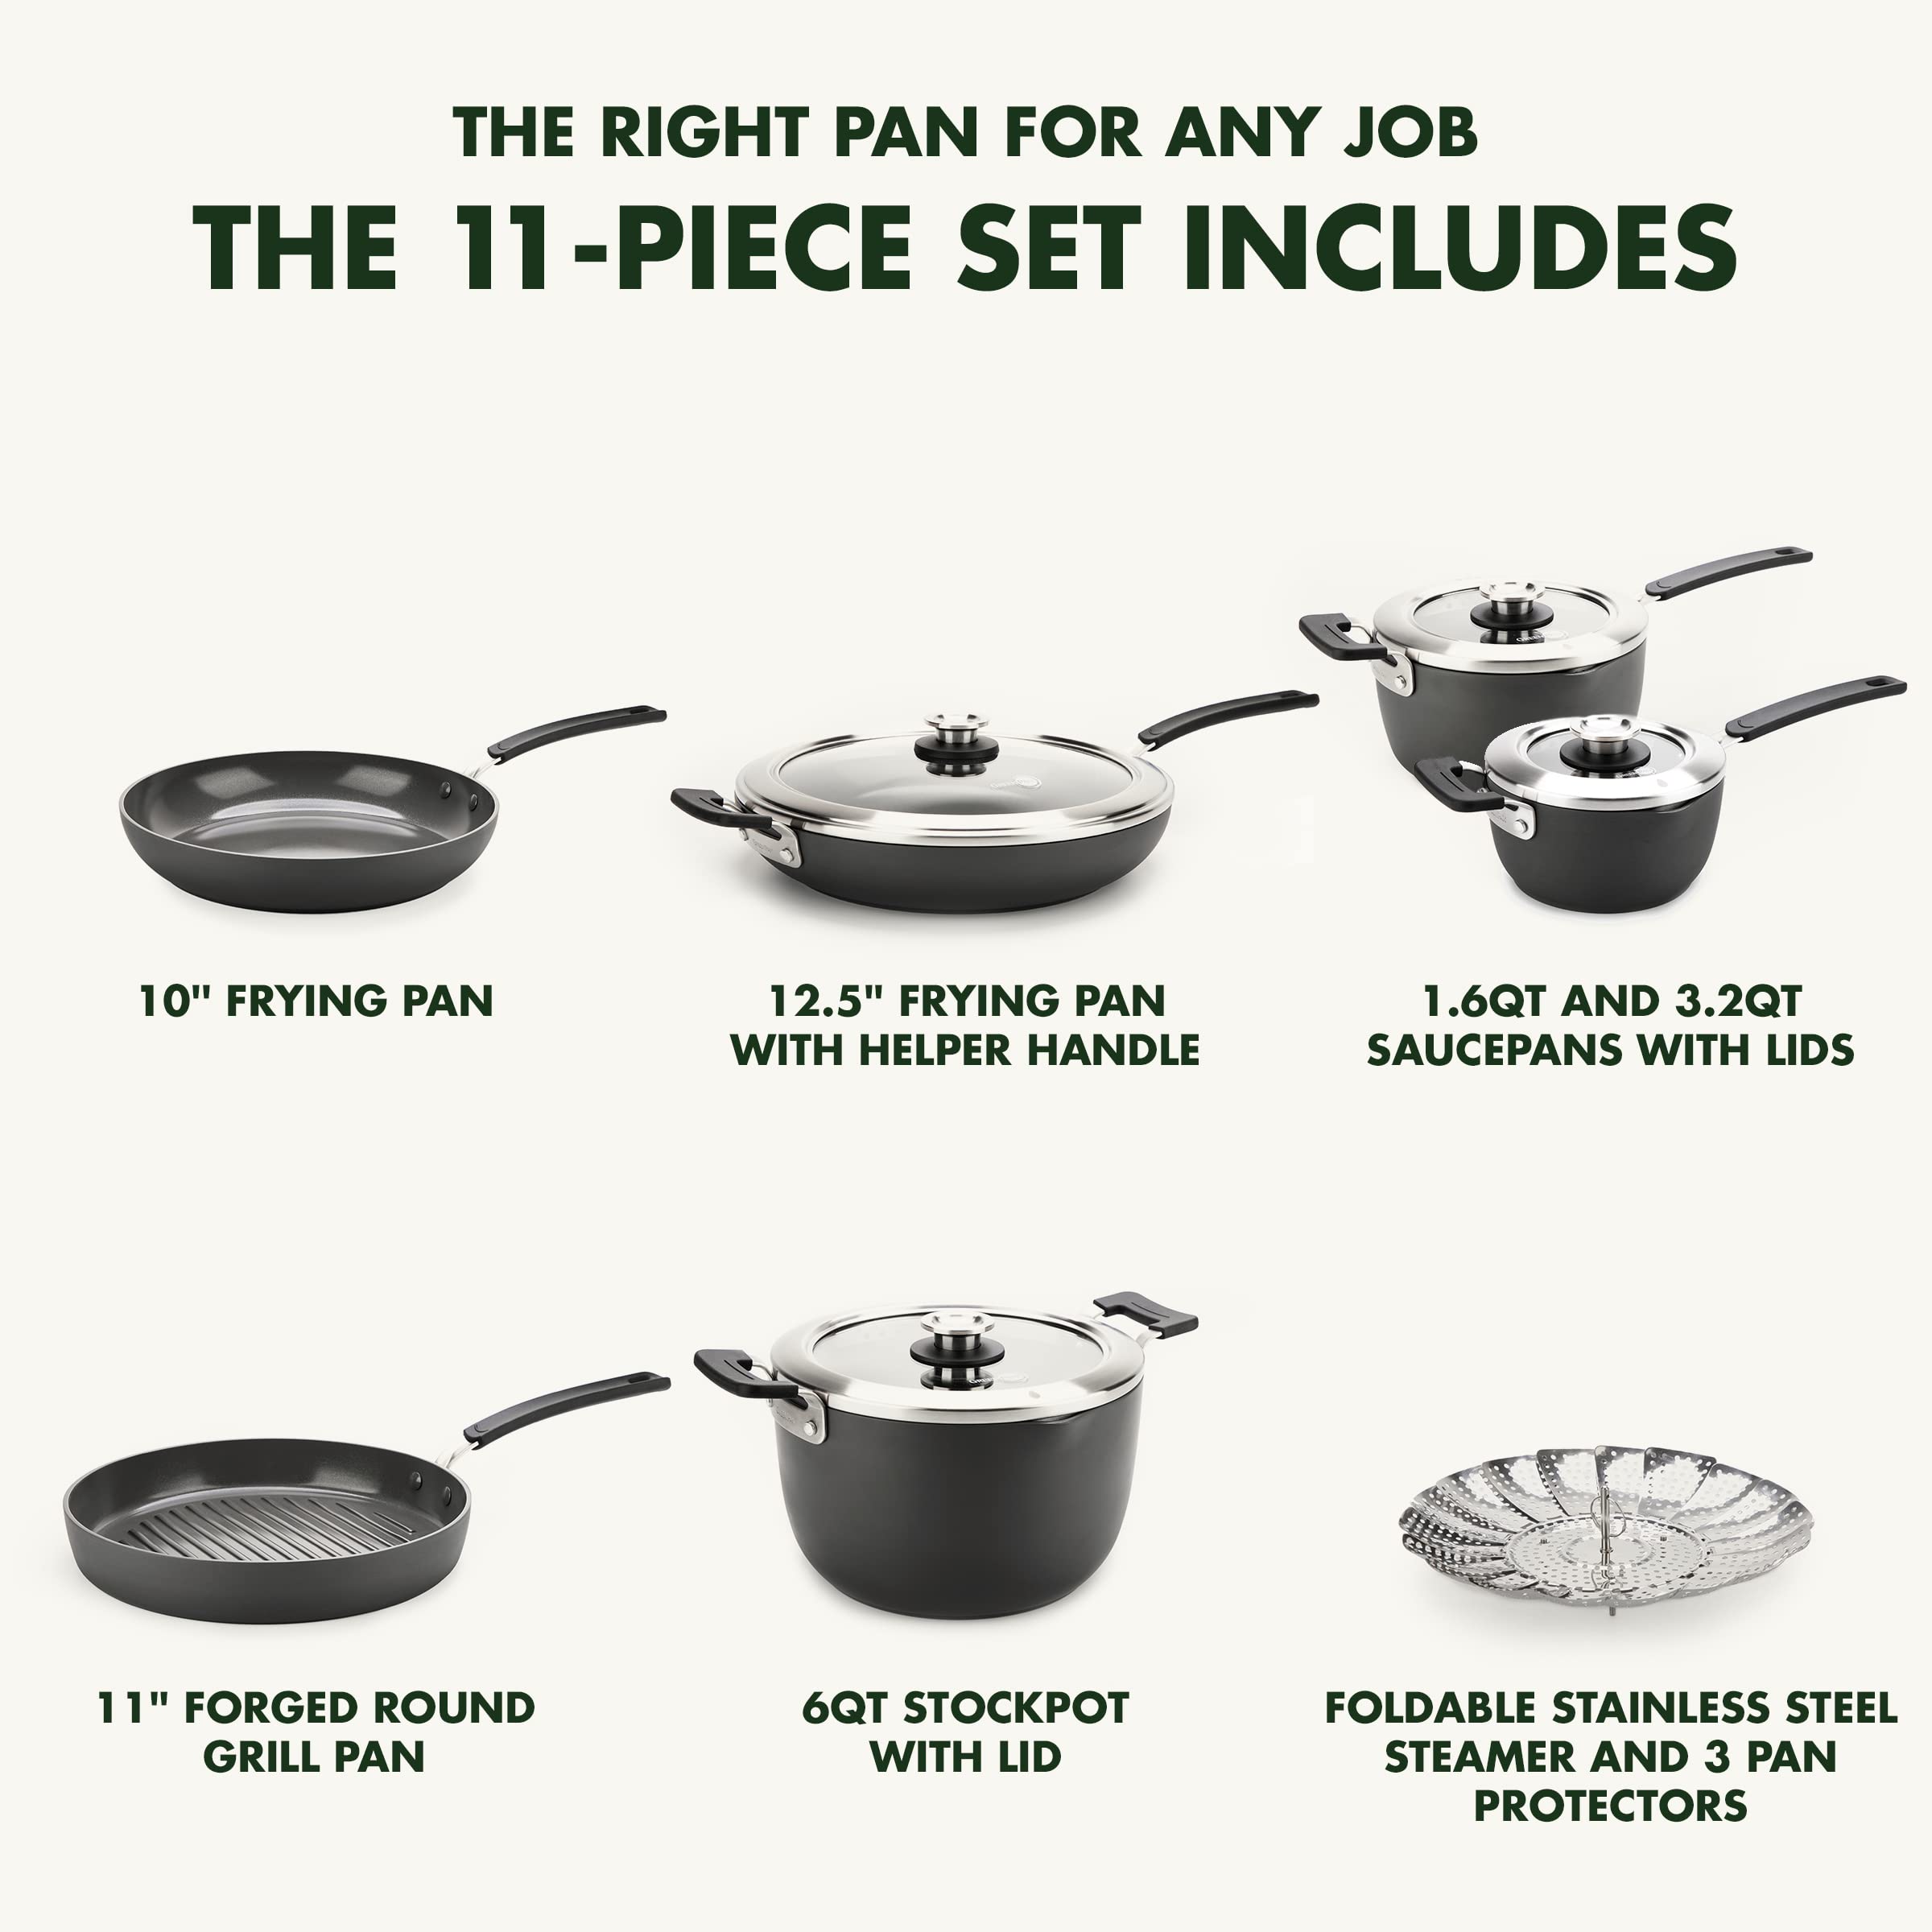 GreenPan Levels Stackable Hard Anodized Healthy Ceramic Nonstick 11 Piece Cookware Pots and Pans Set, PFAS-Free, Dishwasher Safe, Black